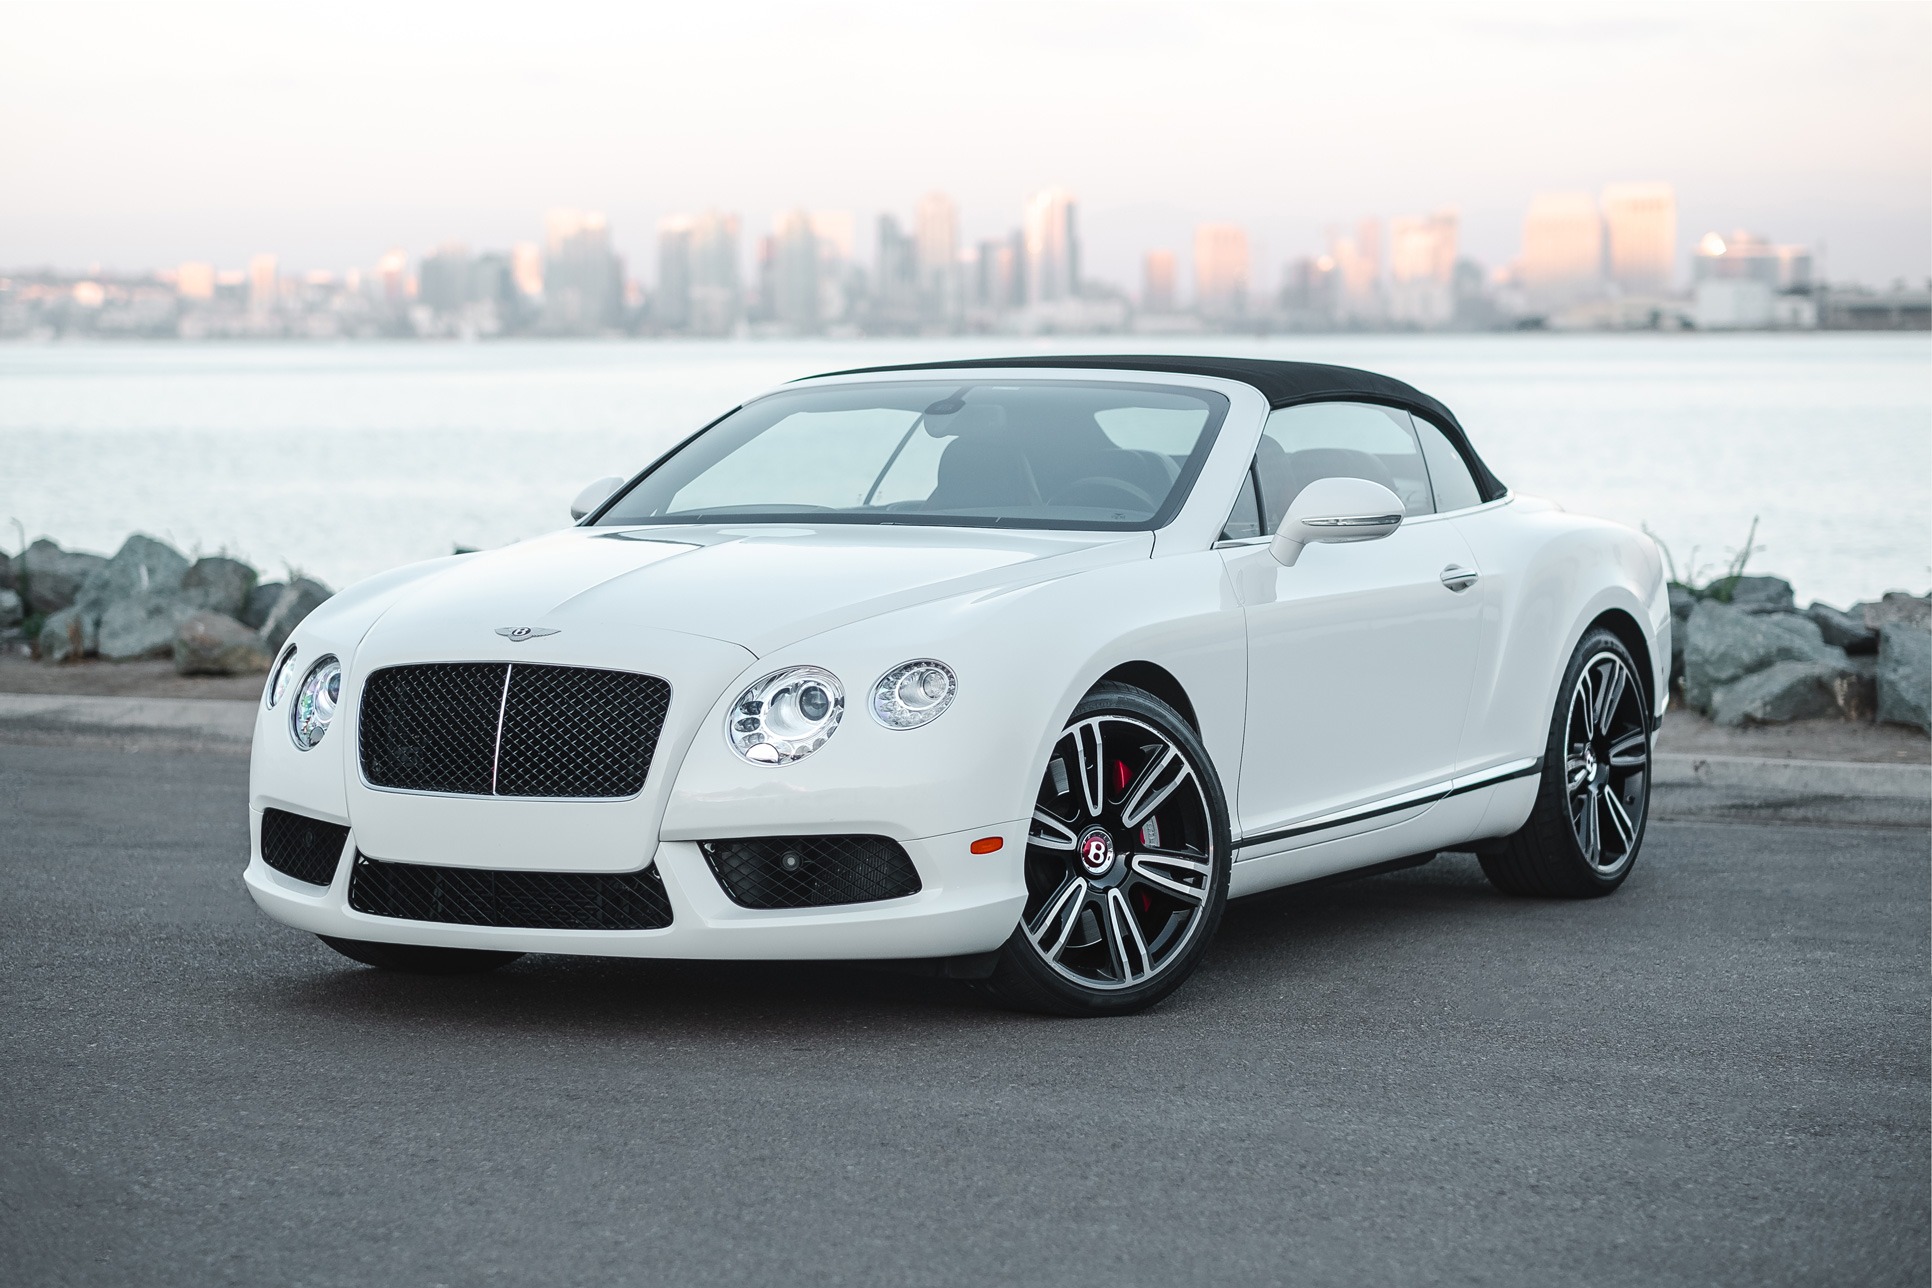 Bentley Continental GT-S (White) Rental in San Diego - Exotic Car Rentals